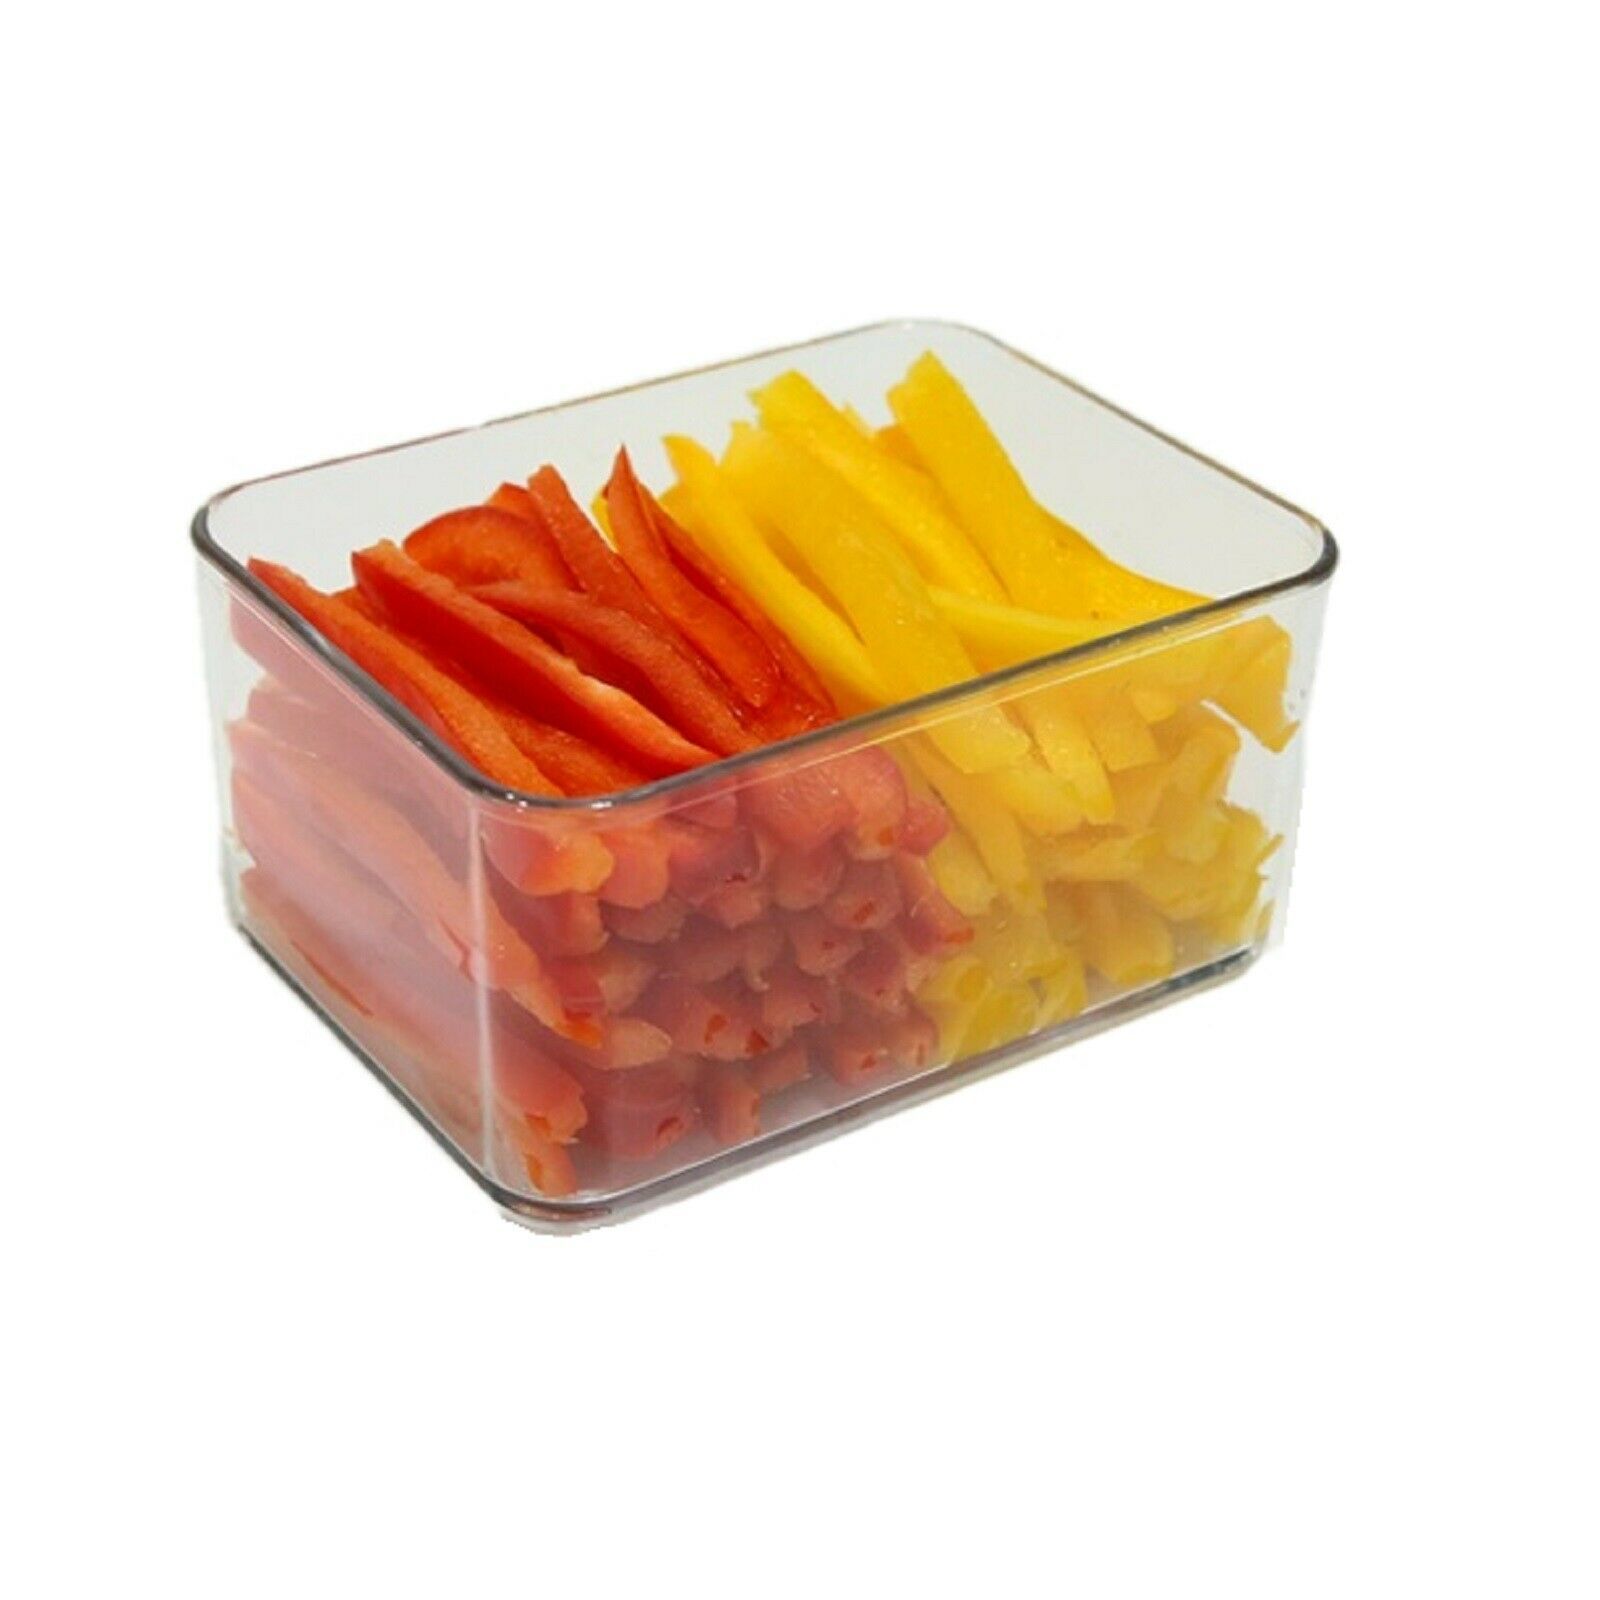 Silicook Refrigerator Food Storage Containers Tray Kitchen Organizer Set(Deep#3)